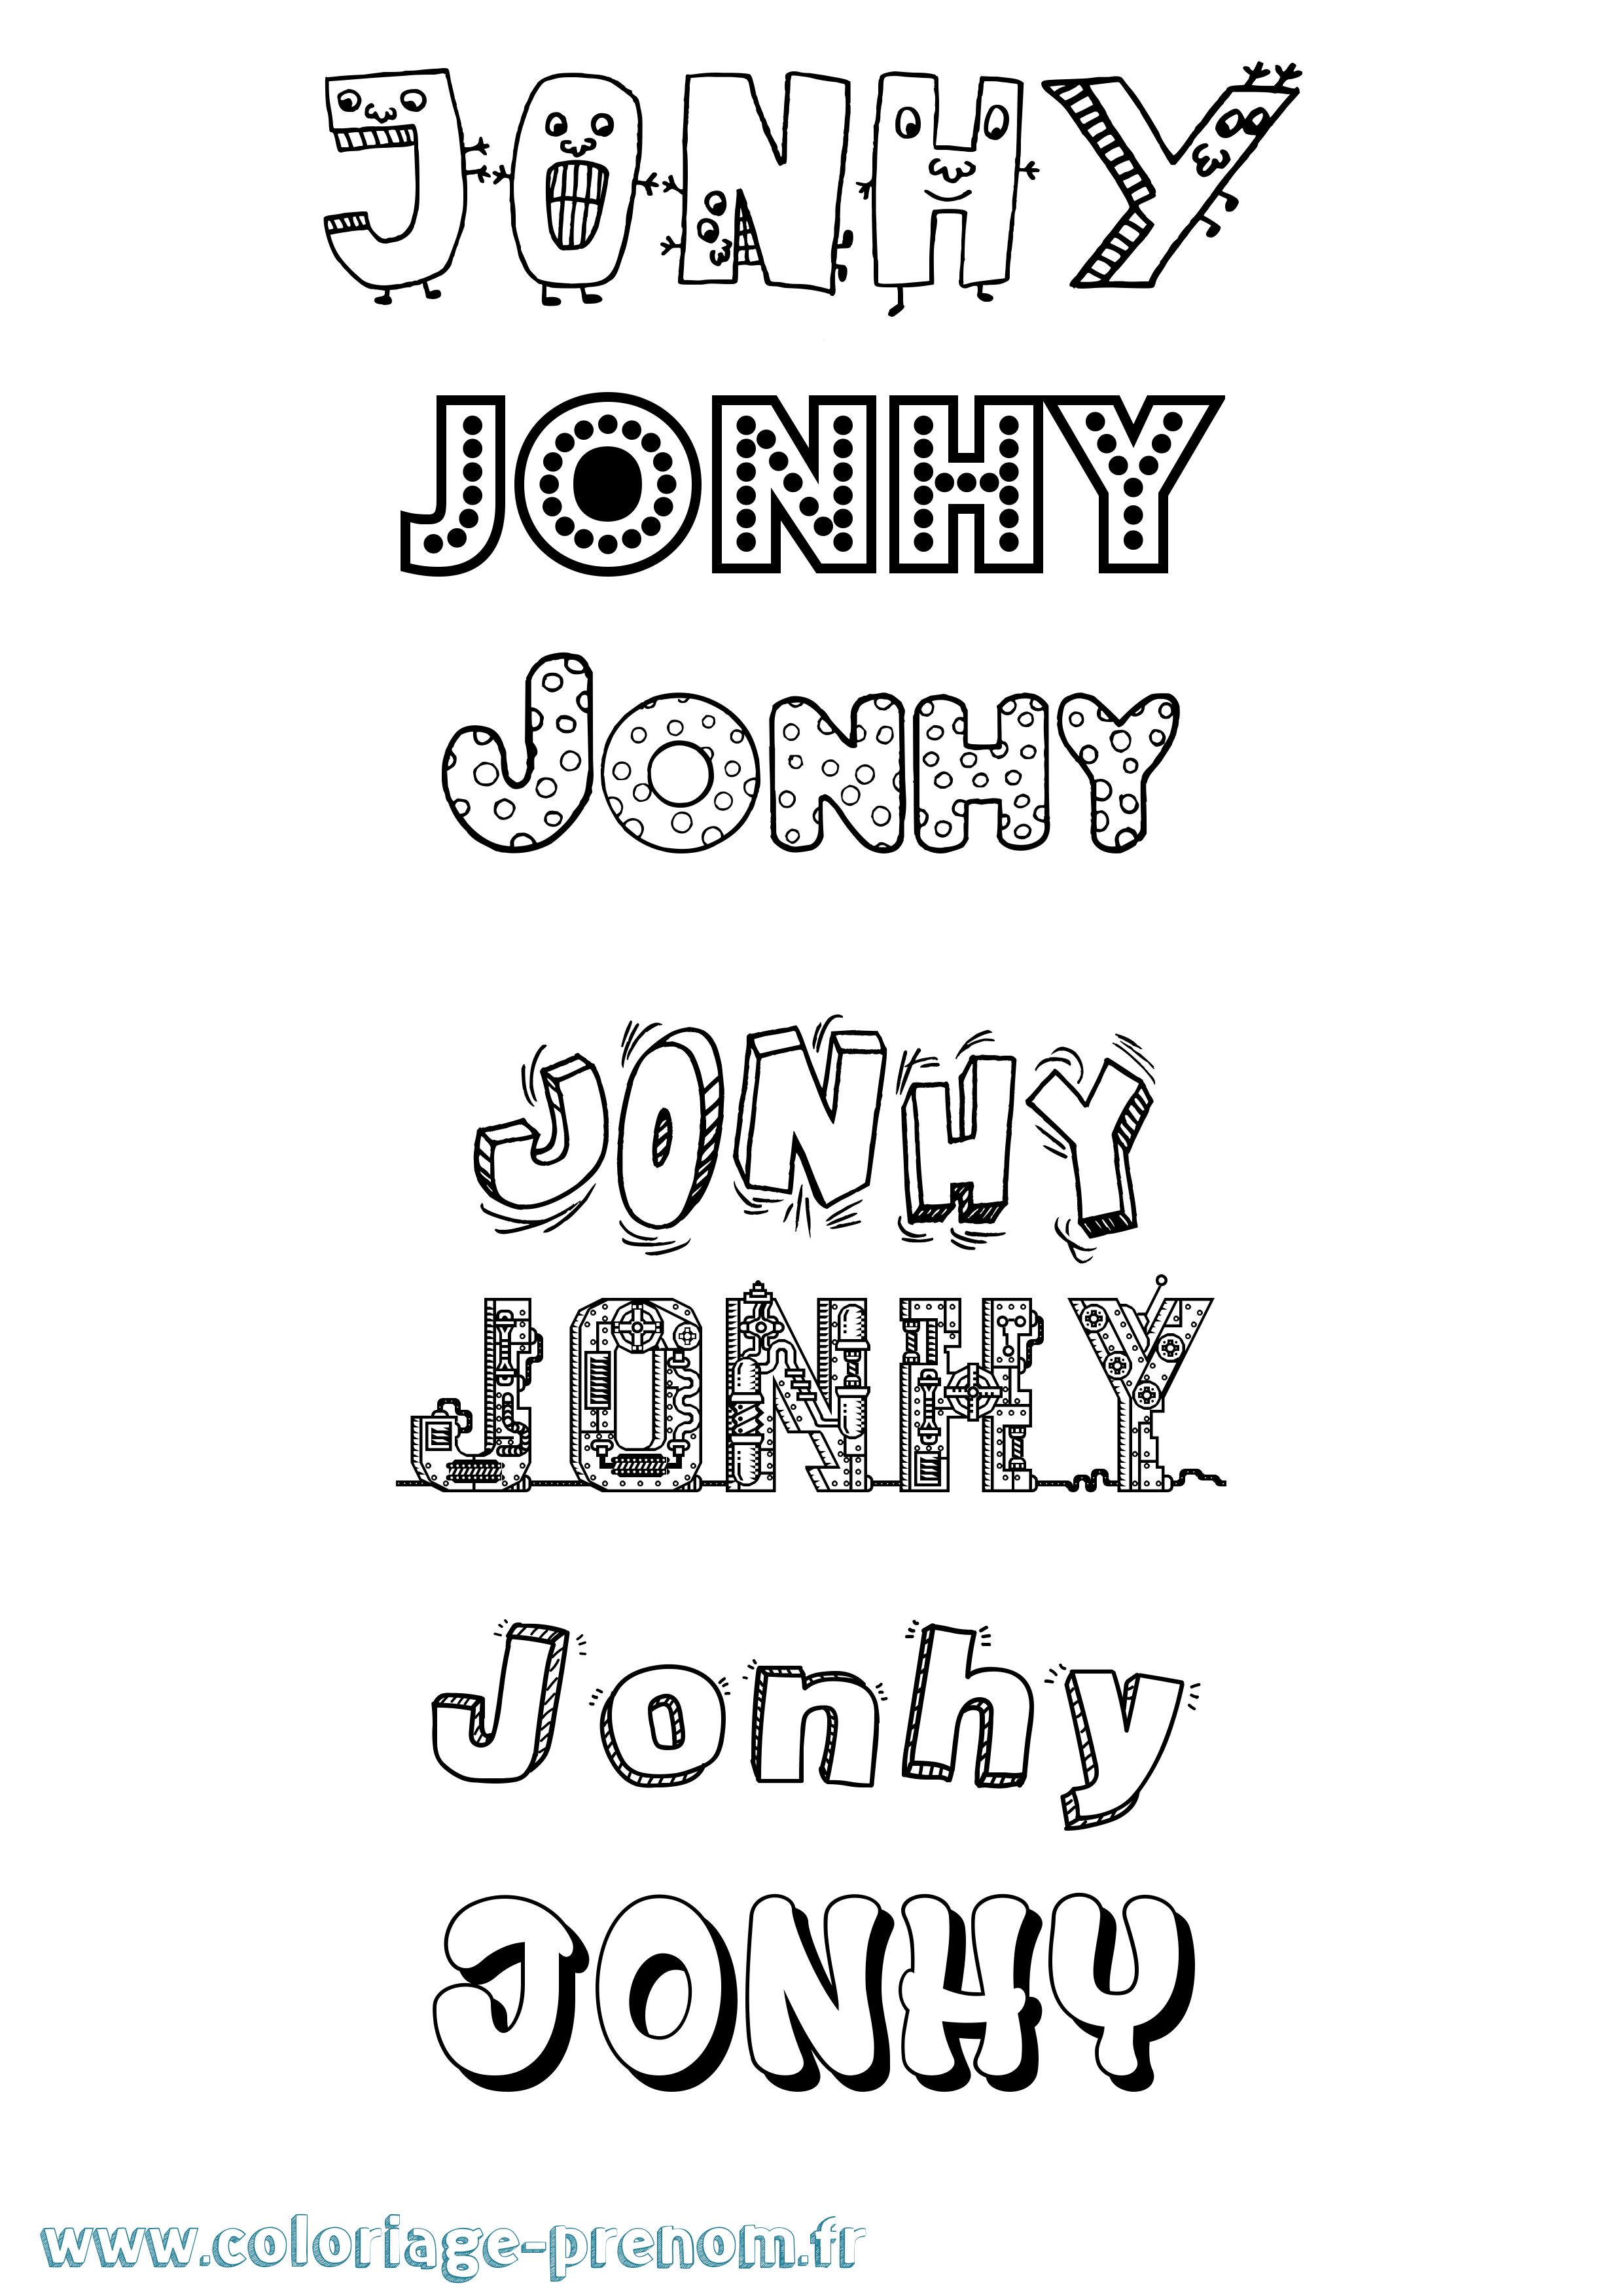 Coloriage prénom Jonhy Fun